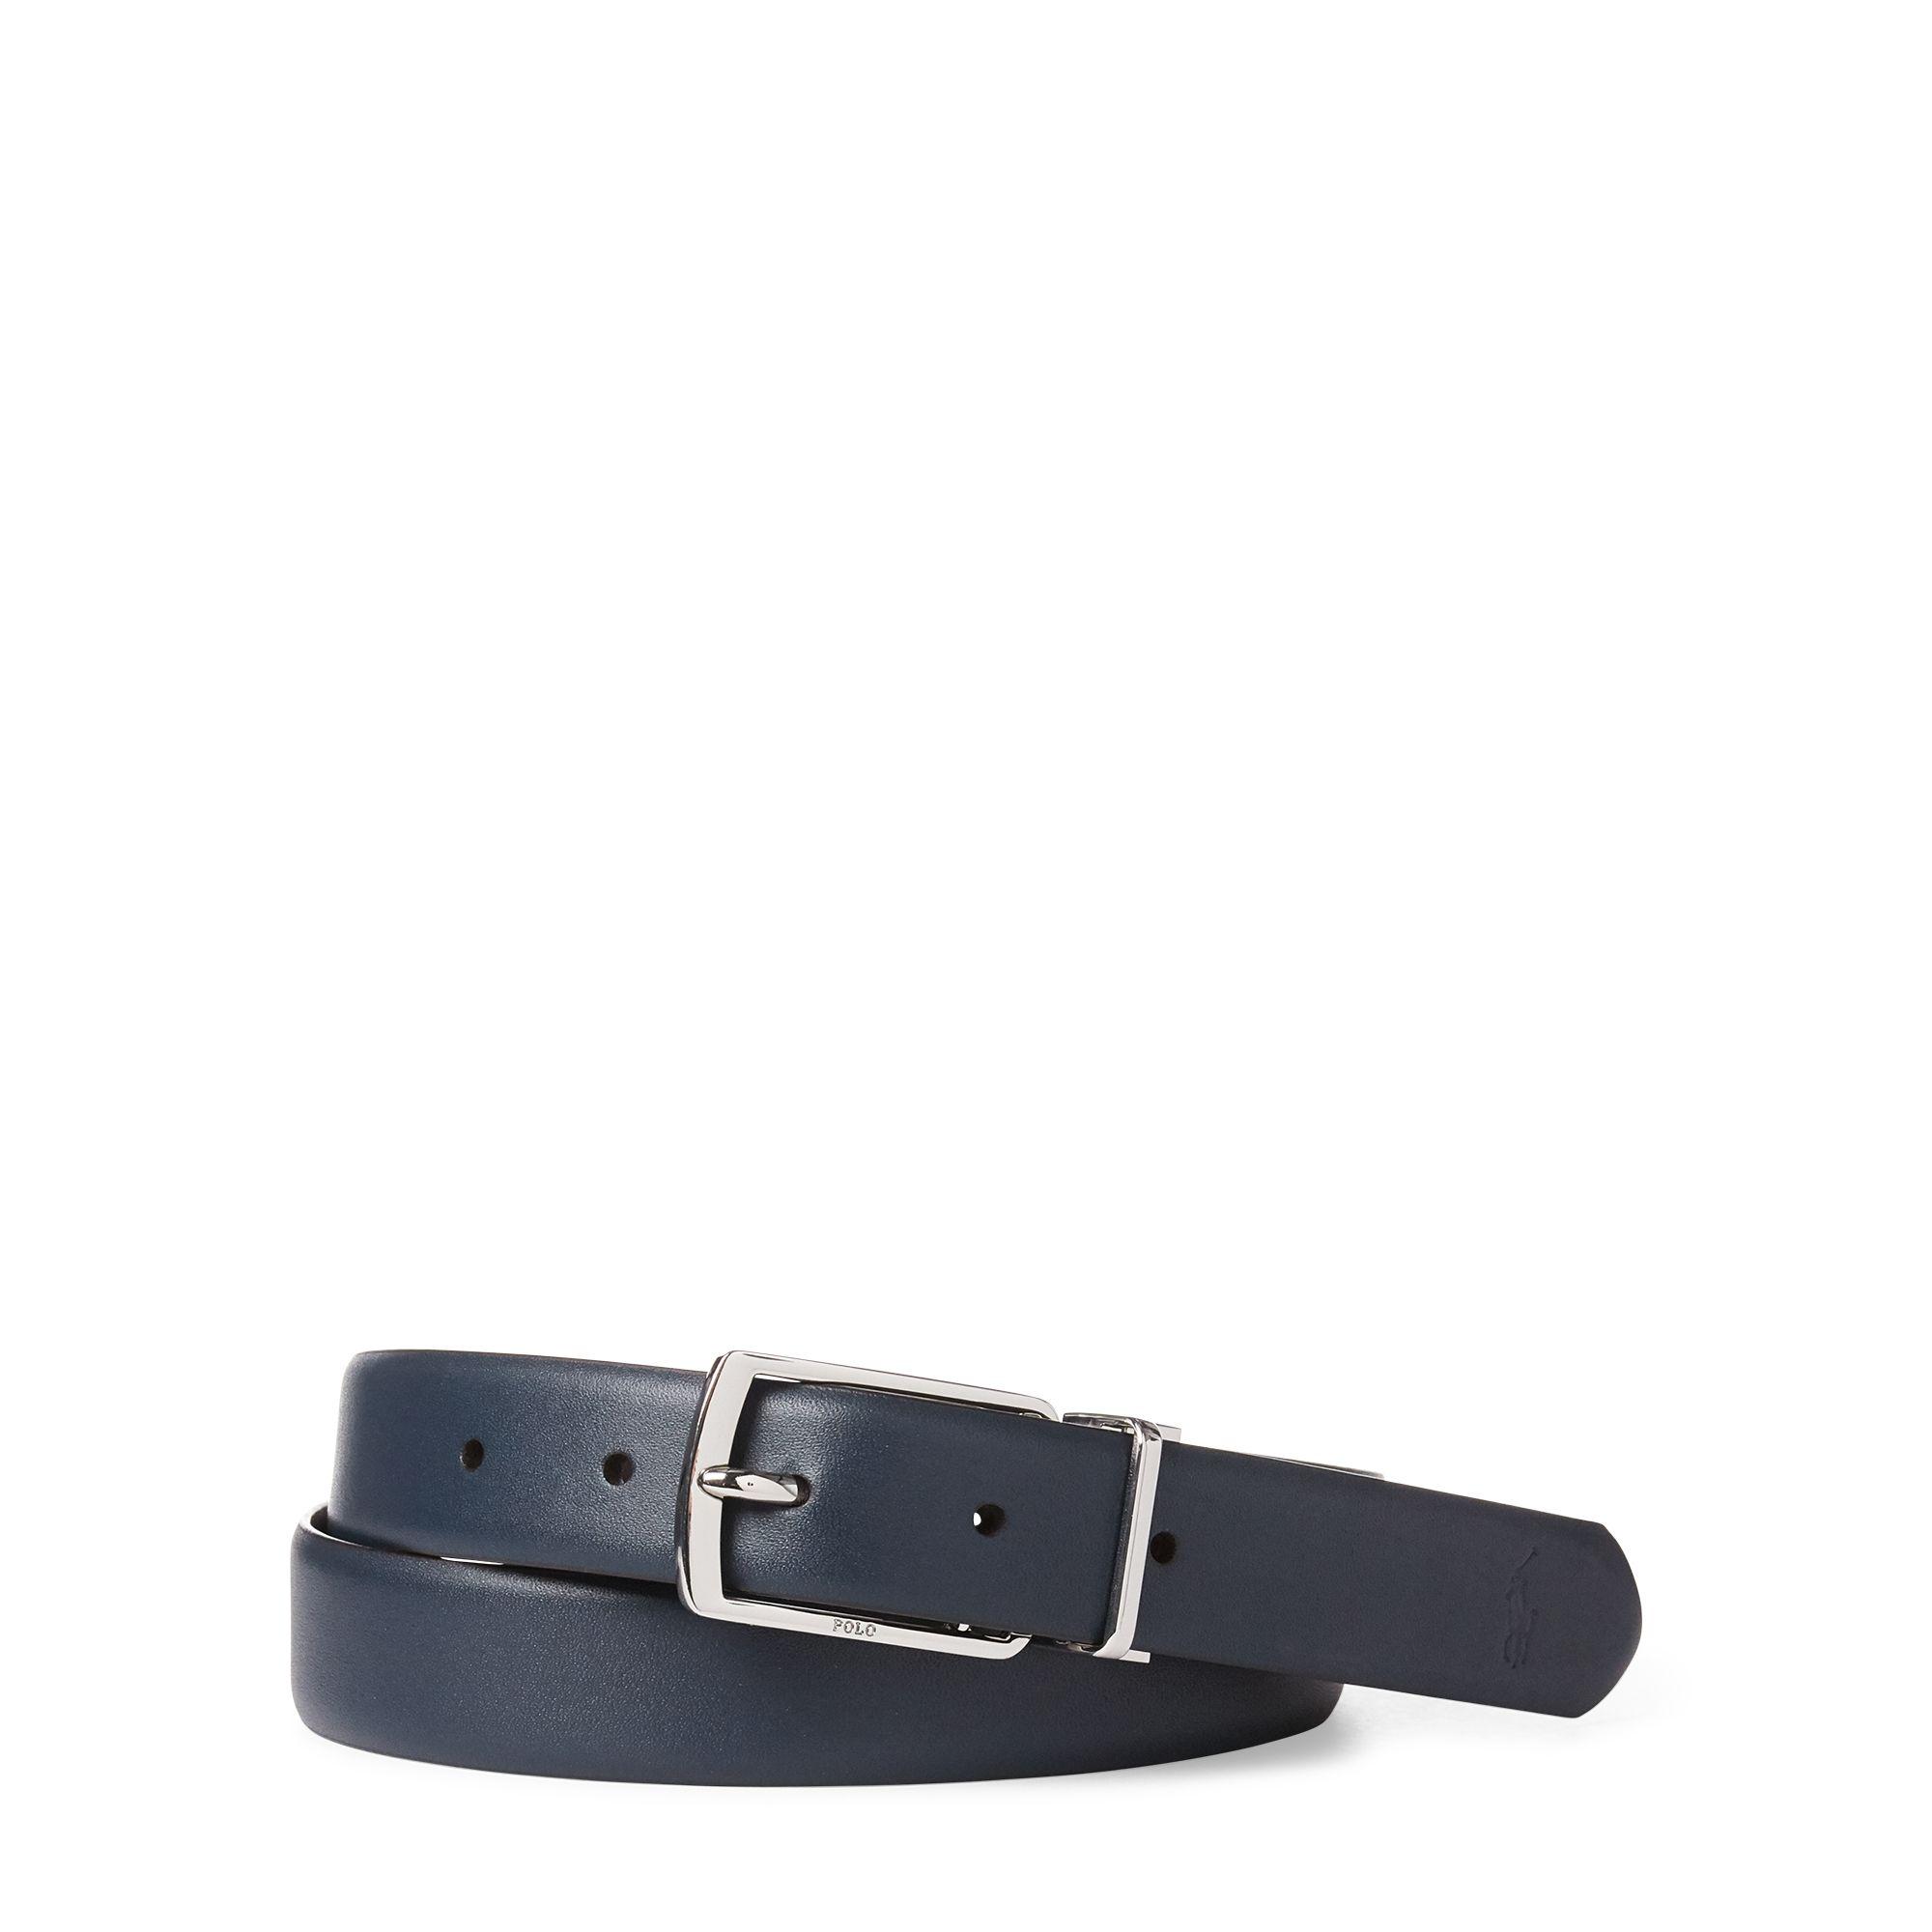 Polo Ralph Lauren Reversible Leather Dress Belt in Blue for Men - Lyst